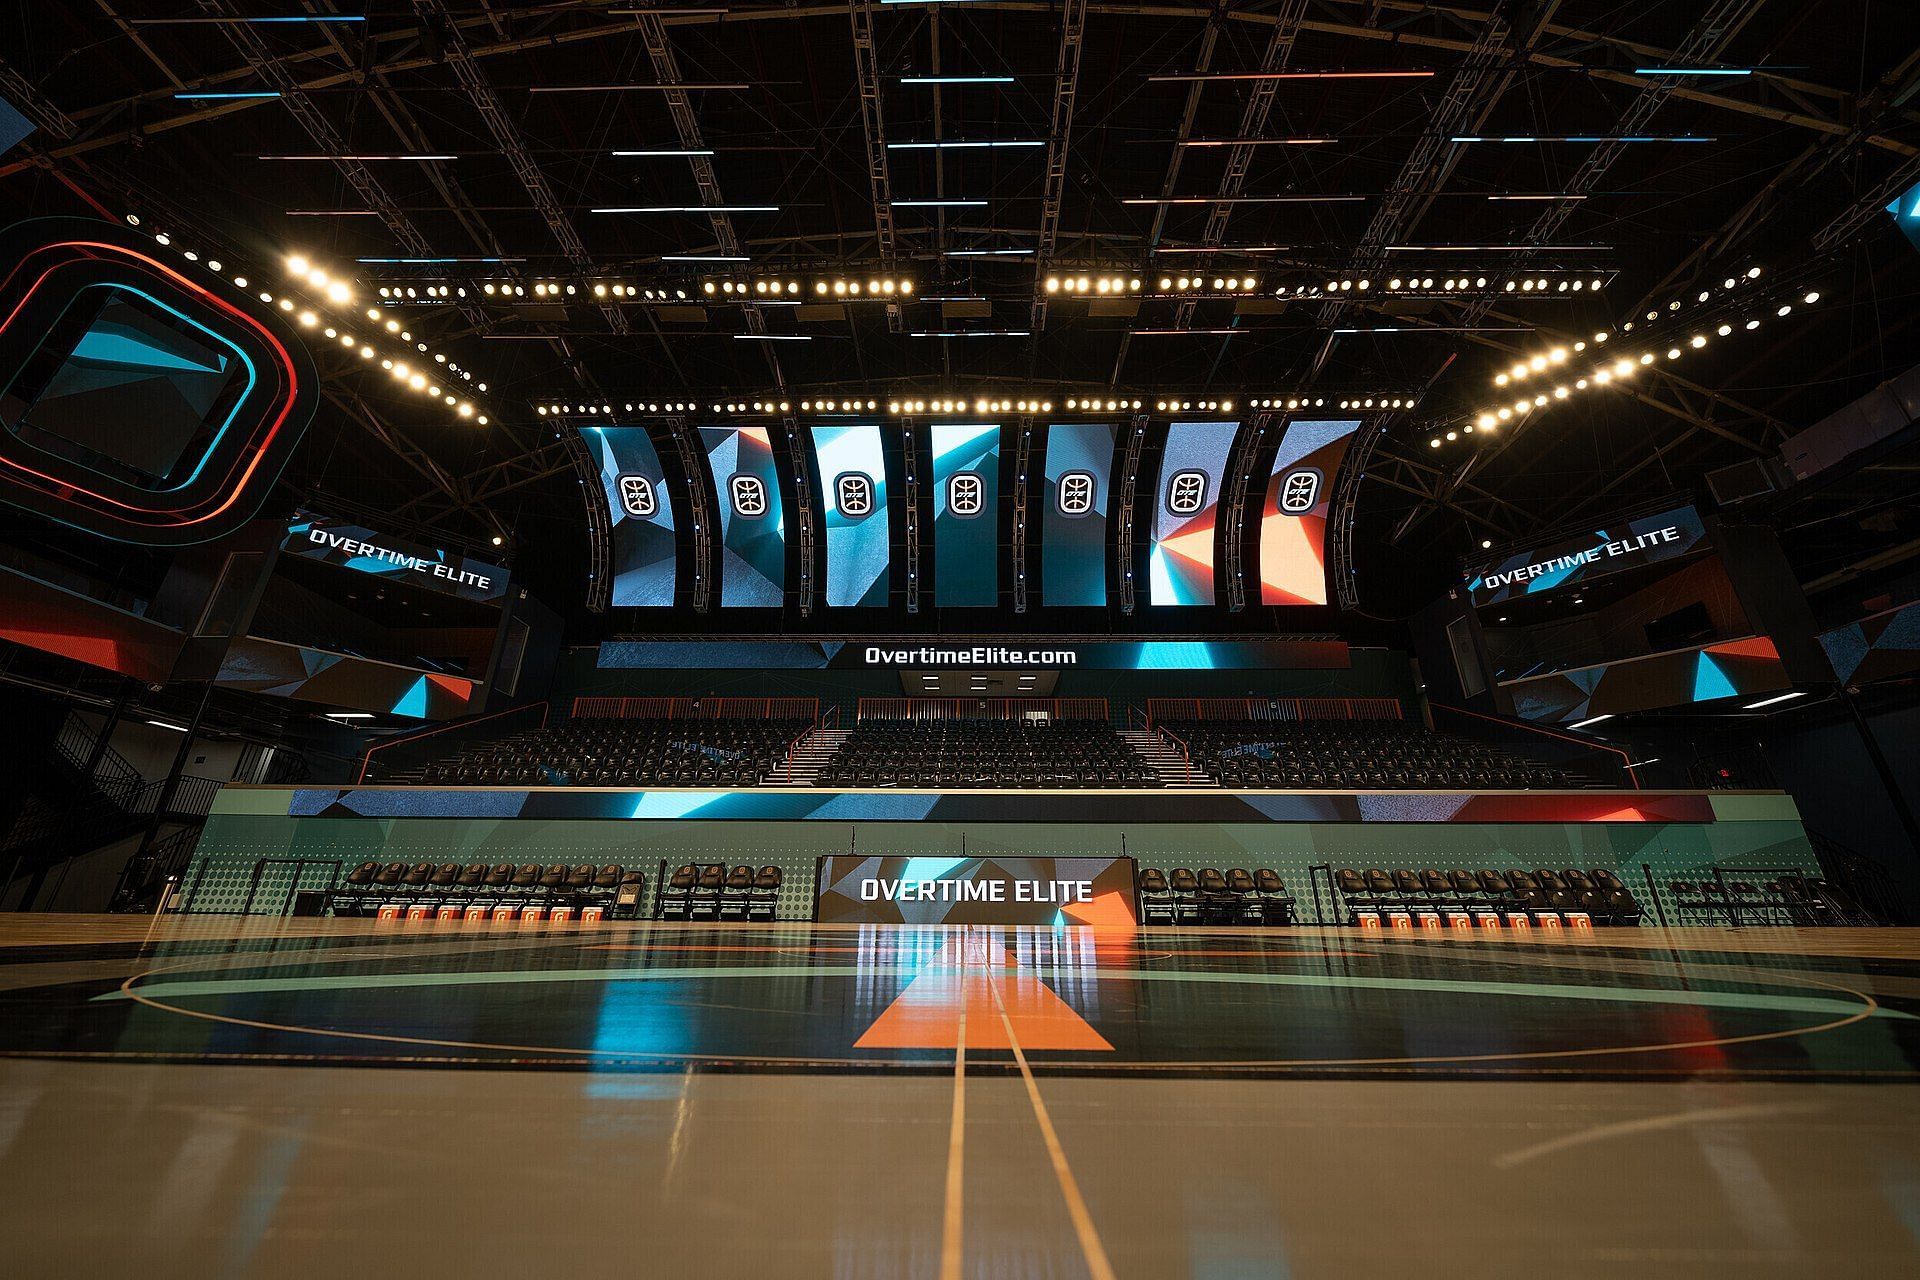 Overtime Elite Arena looks amazing and has three NBA regulation-size courts (Image via Wikimedia)